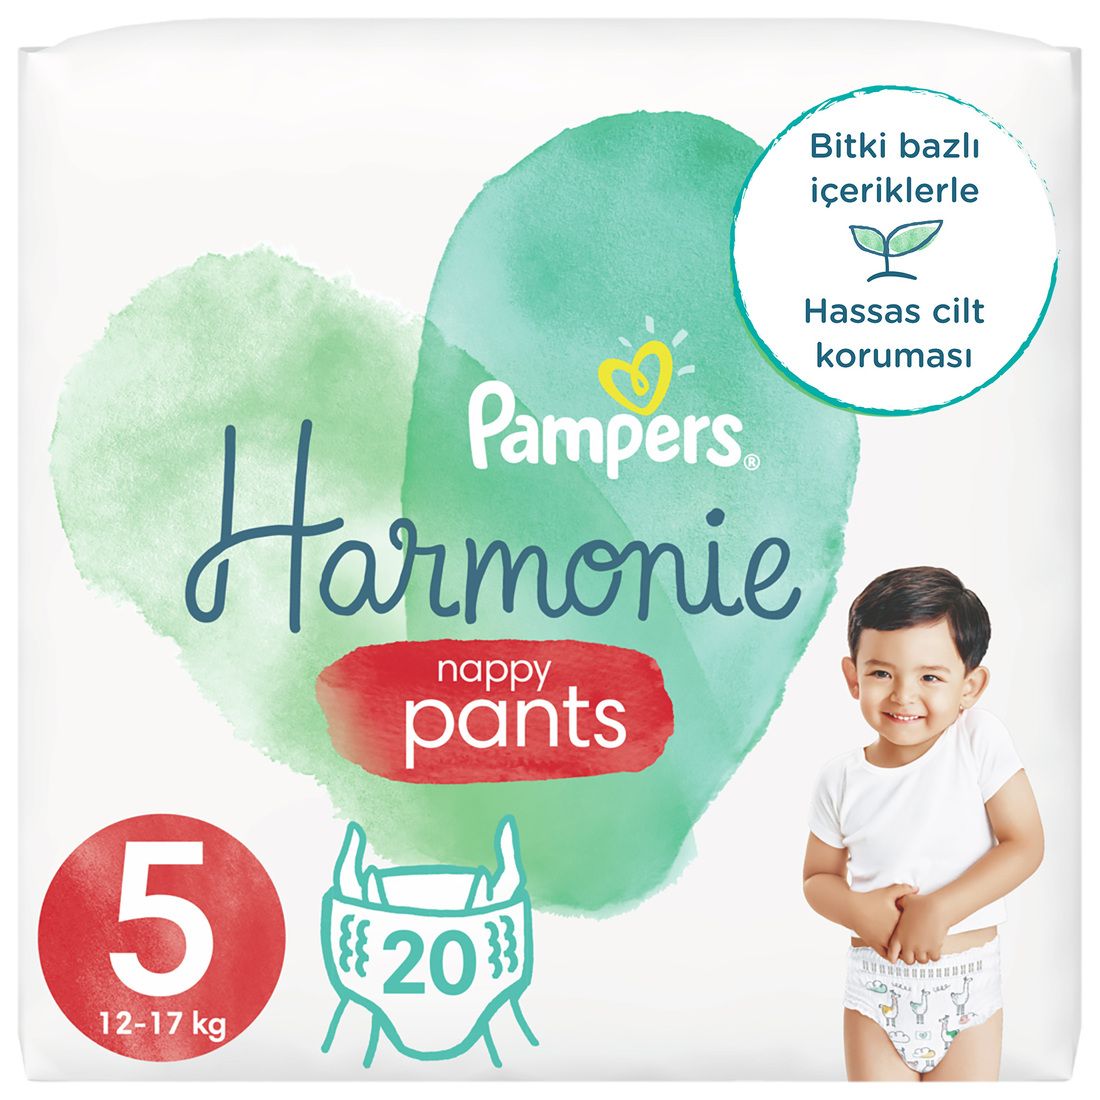 PAMPERS Harmonie Nappy Pants 5 (12-17 kg) nappy pants , 20 pcs.